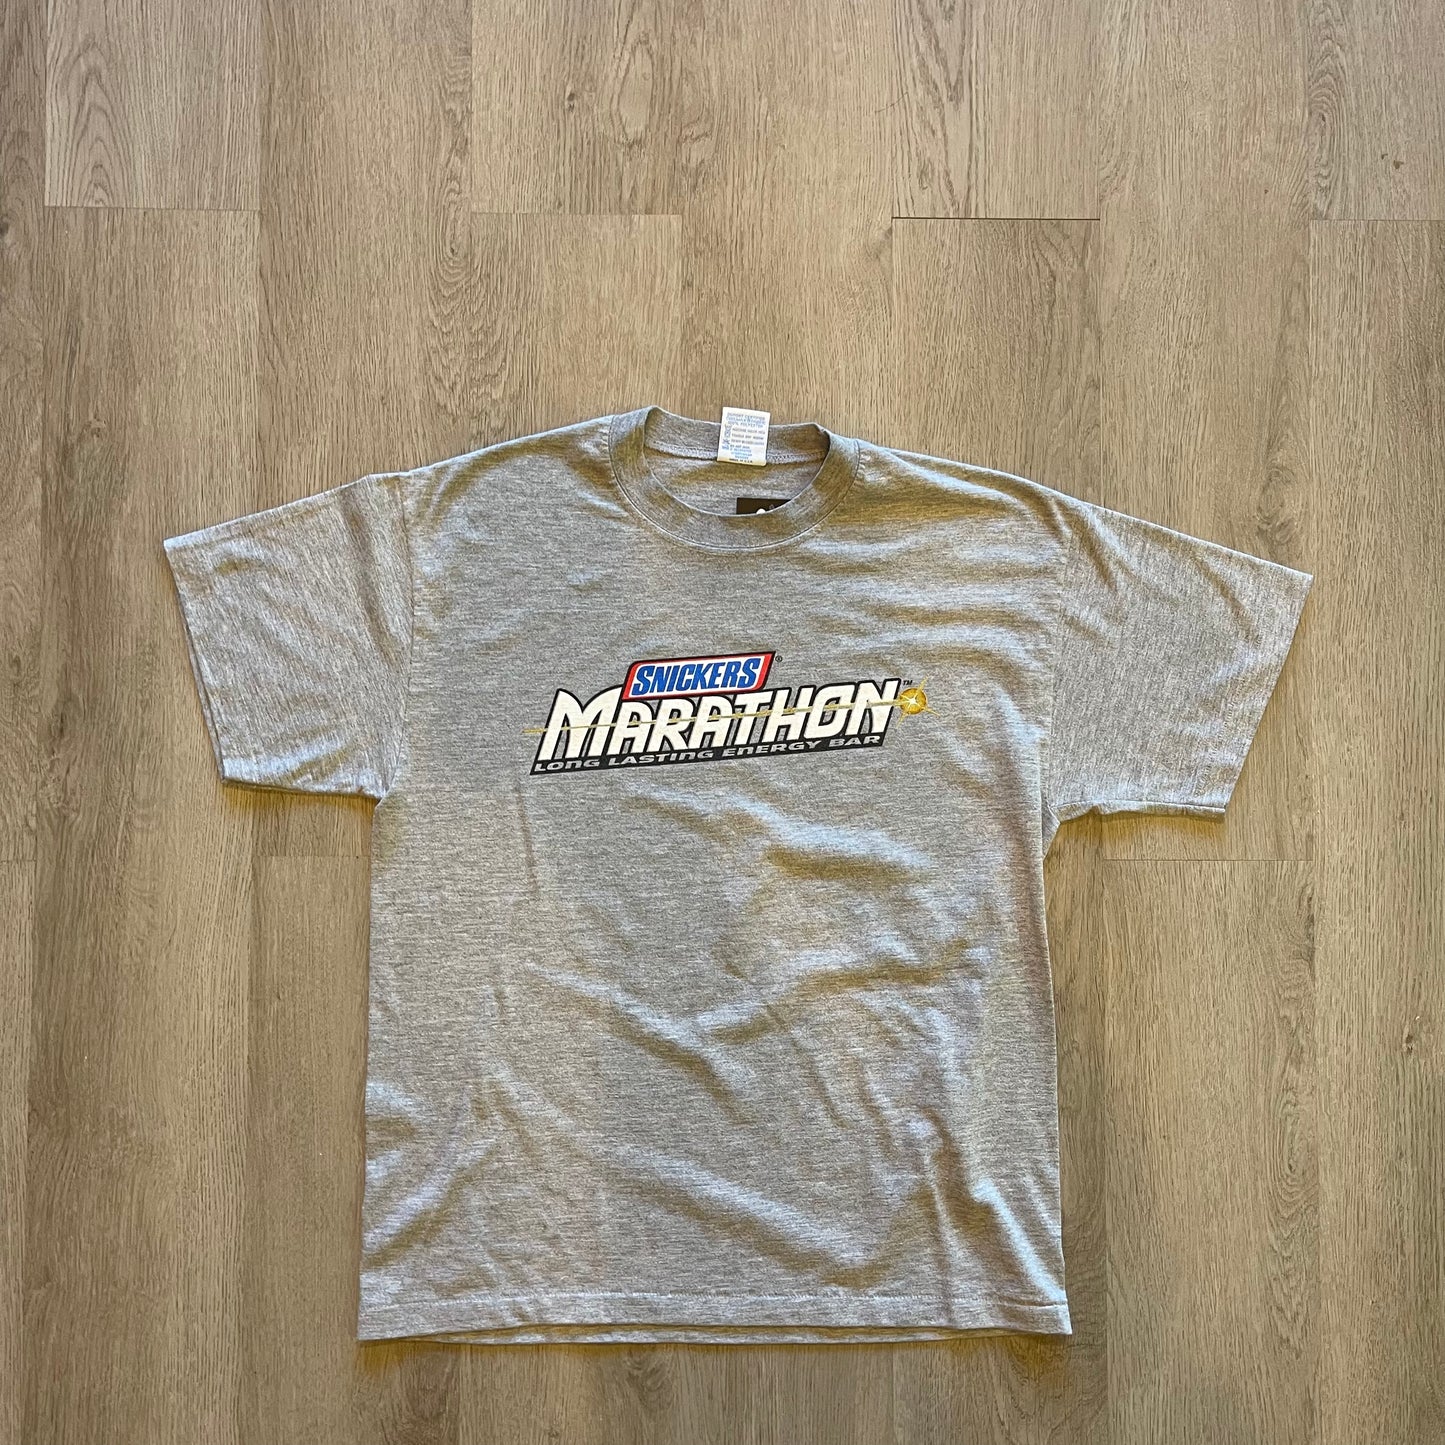 Snickers Marathon Vintage T-shirt